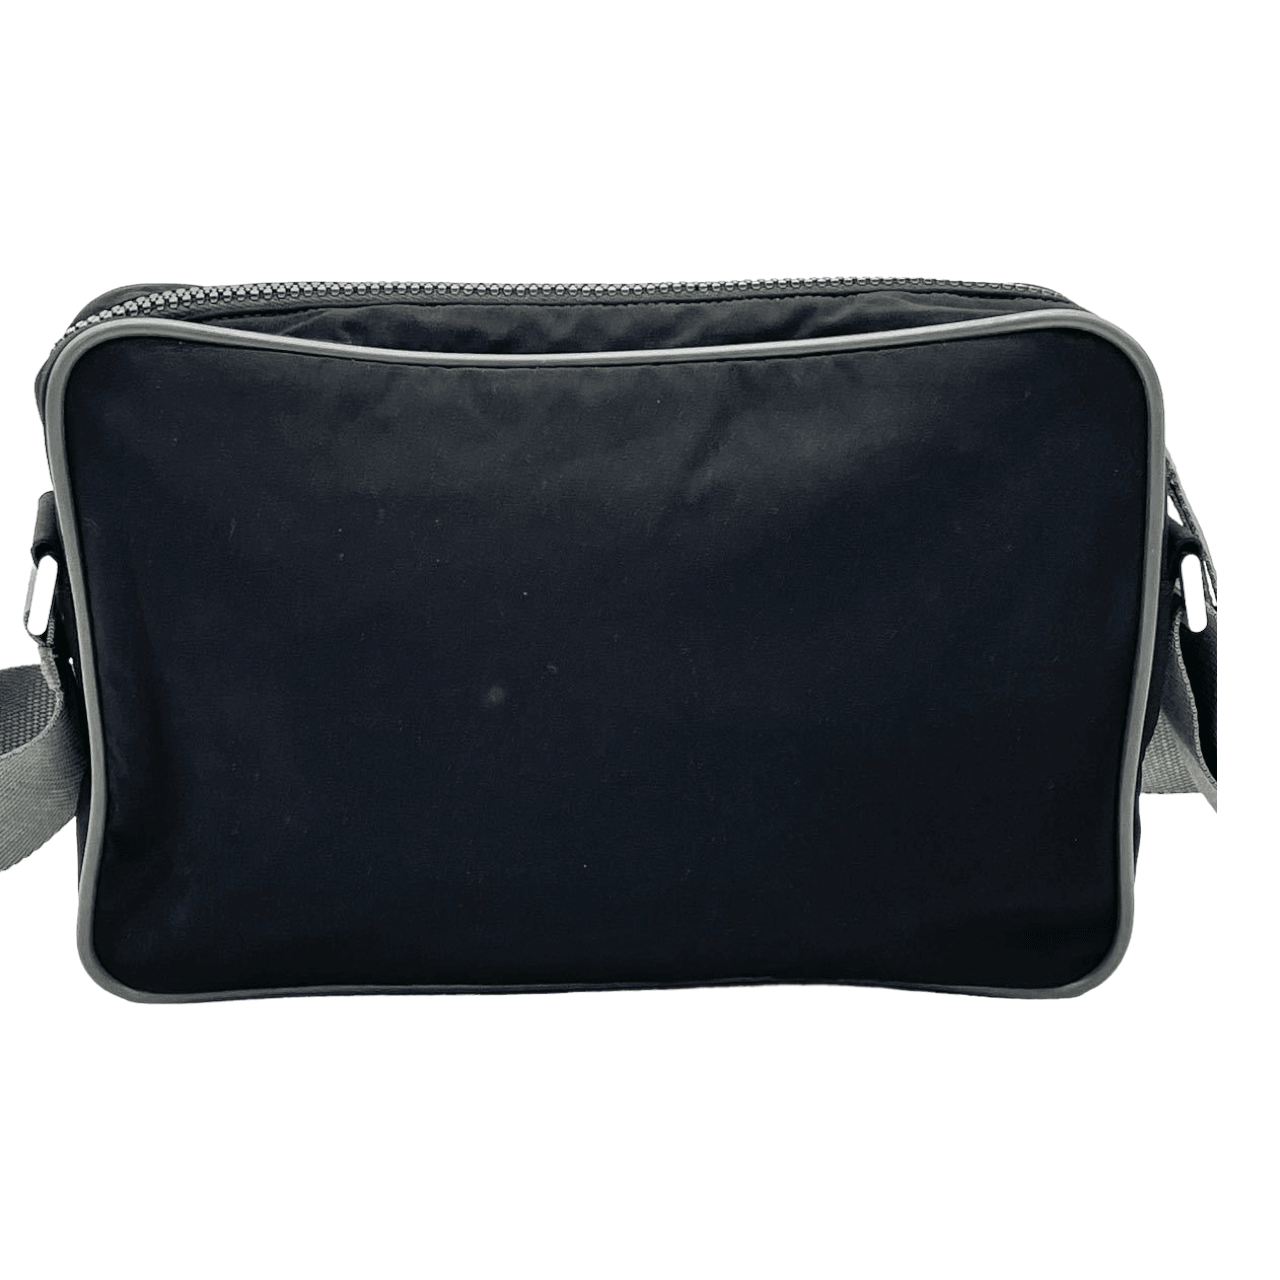 Prada sports nylon black shoulder bag - Known Source